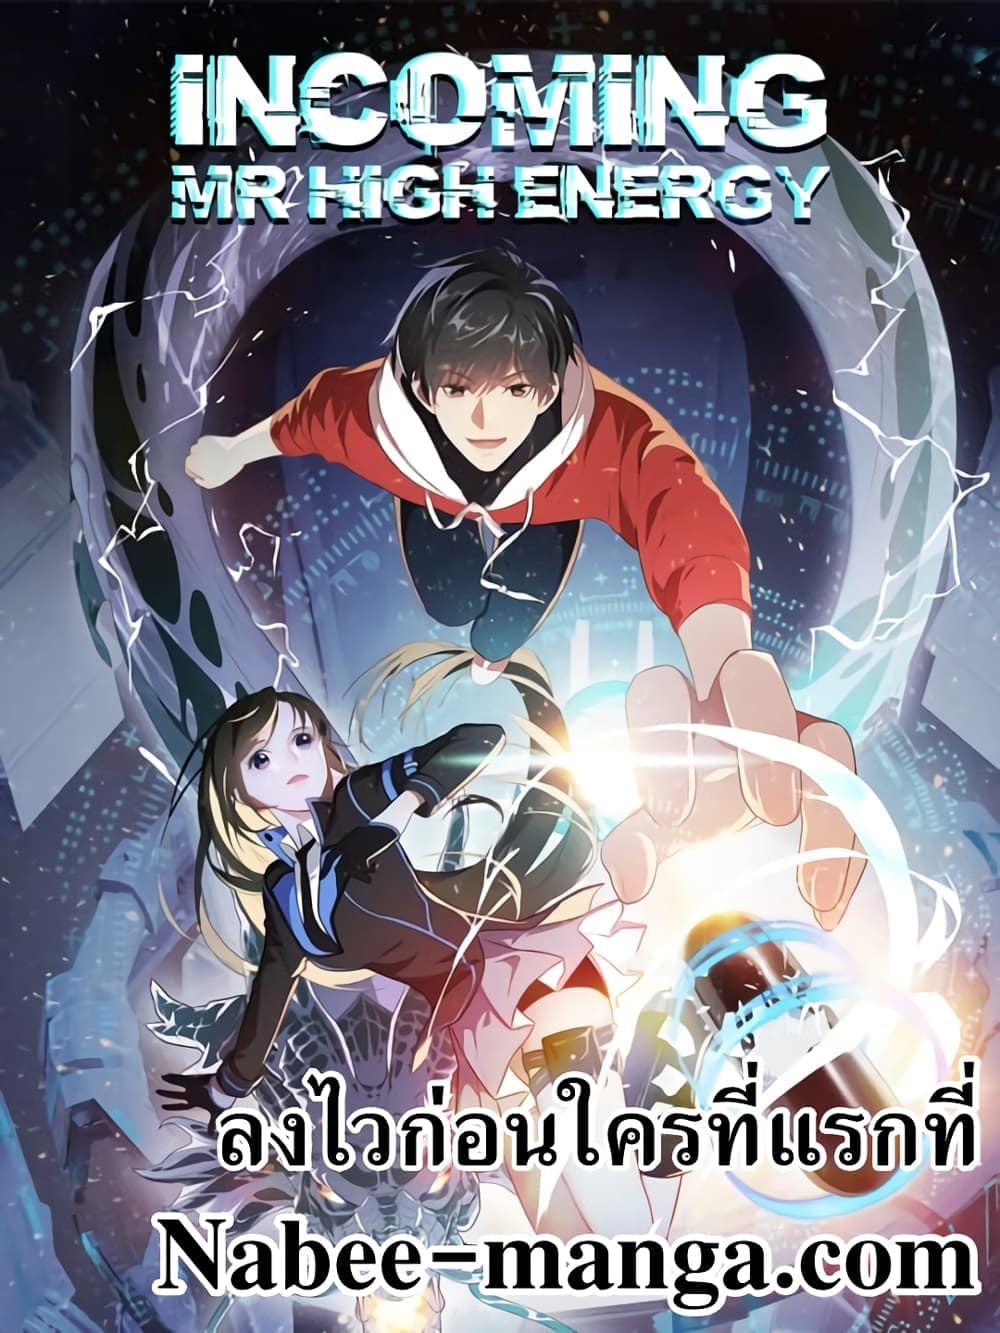 High Energy Strikes à¸à¸­à¸à¸à¸µà¹ 238 (1)